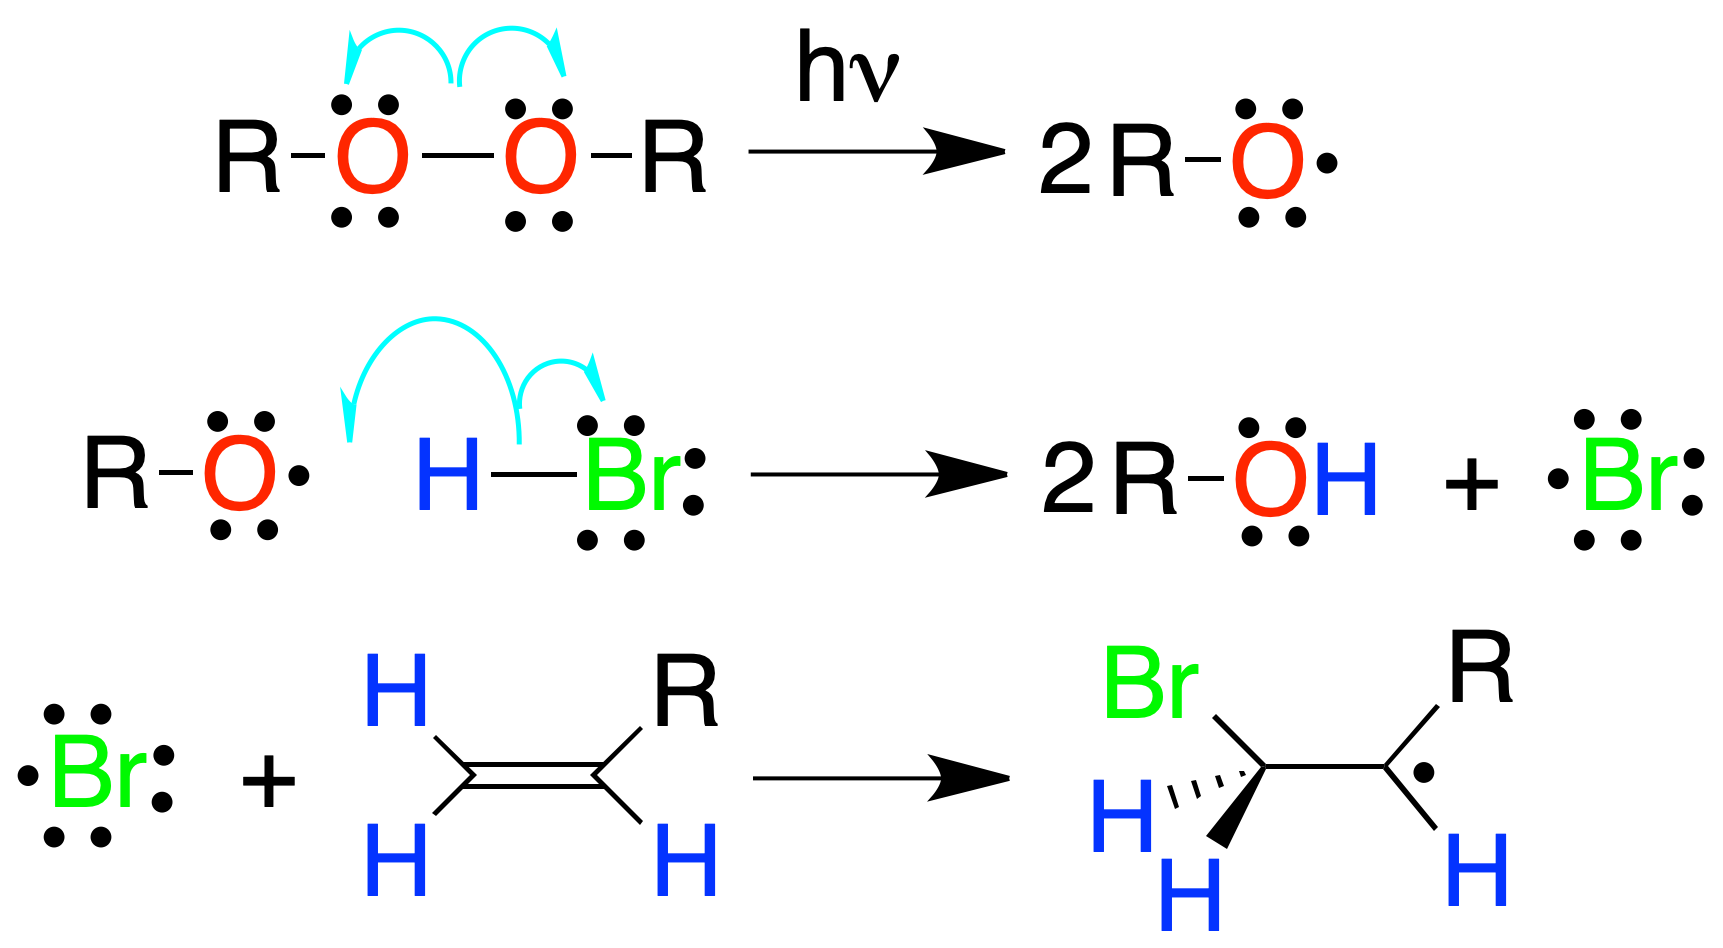 reactivity of alkenes: free radical addition of HBr